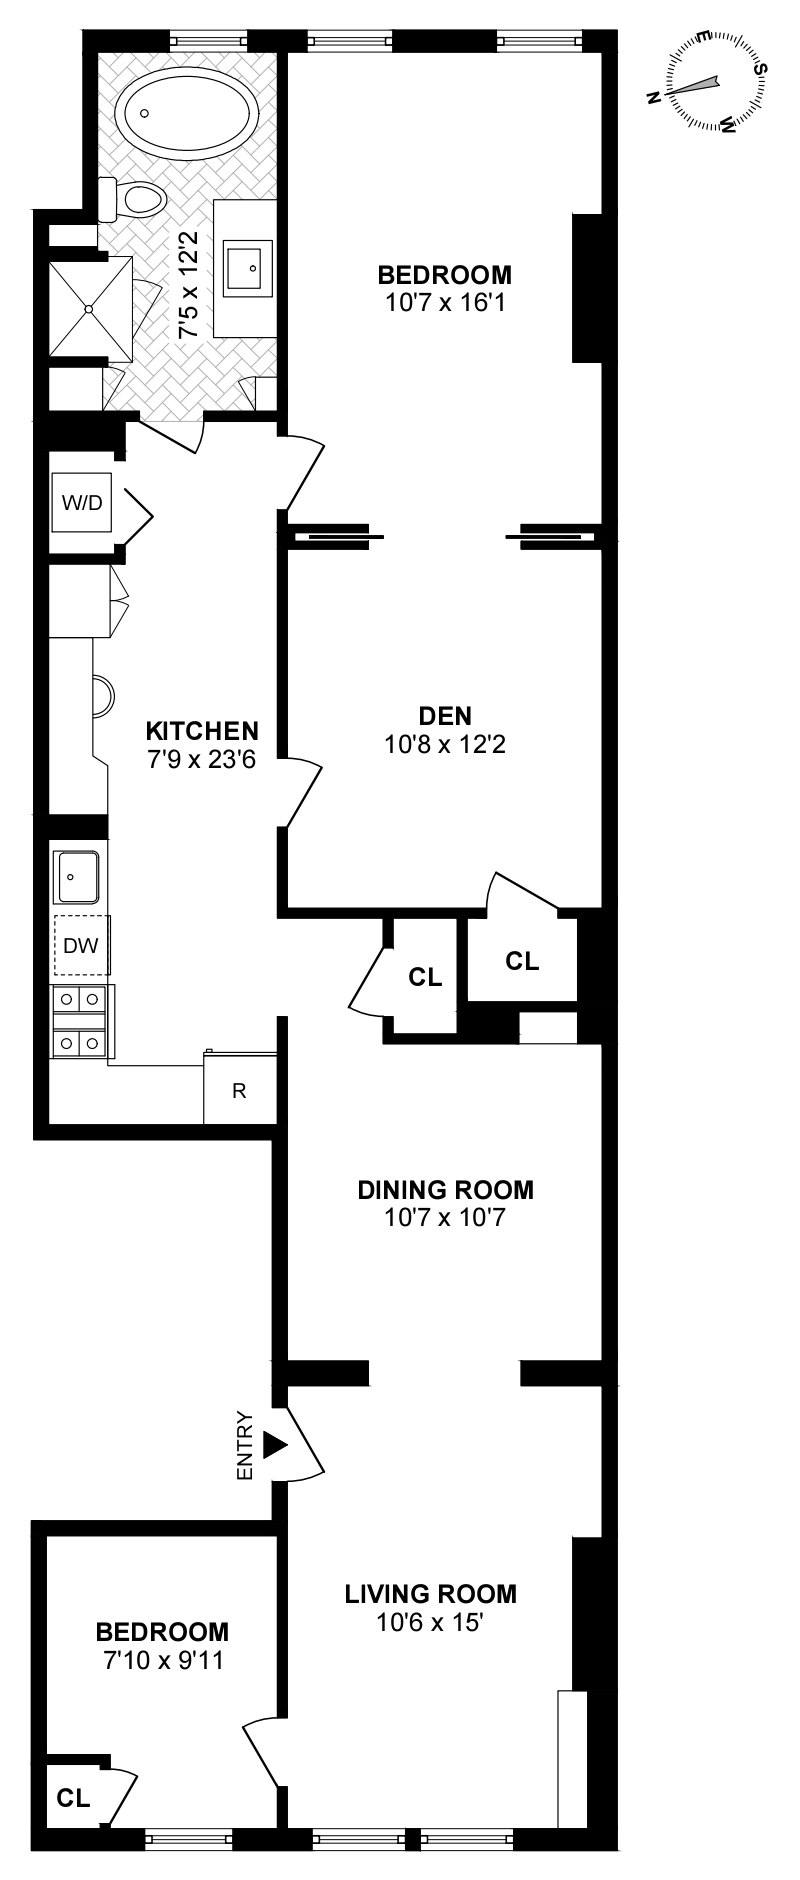 Floorplan for 921 Garden St, 3